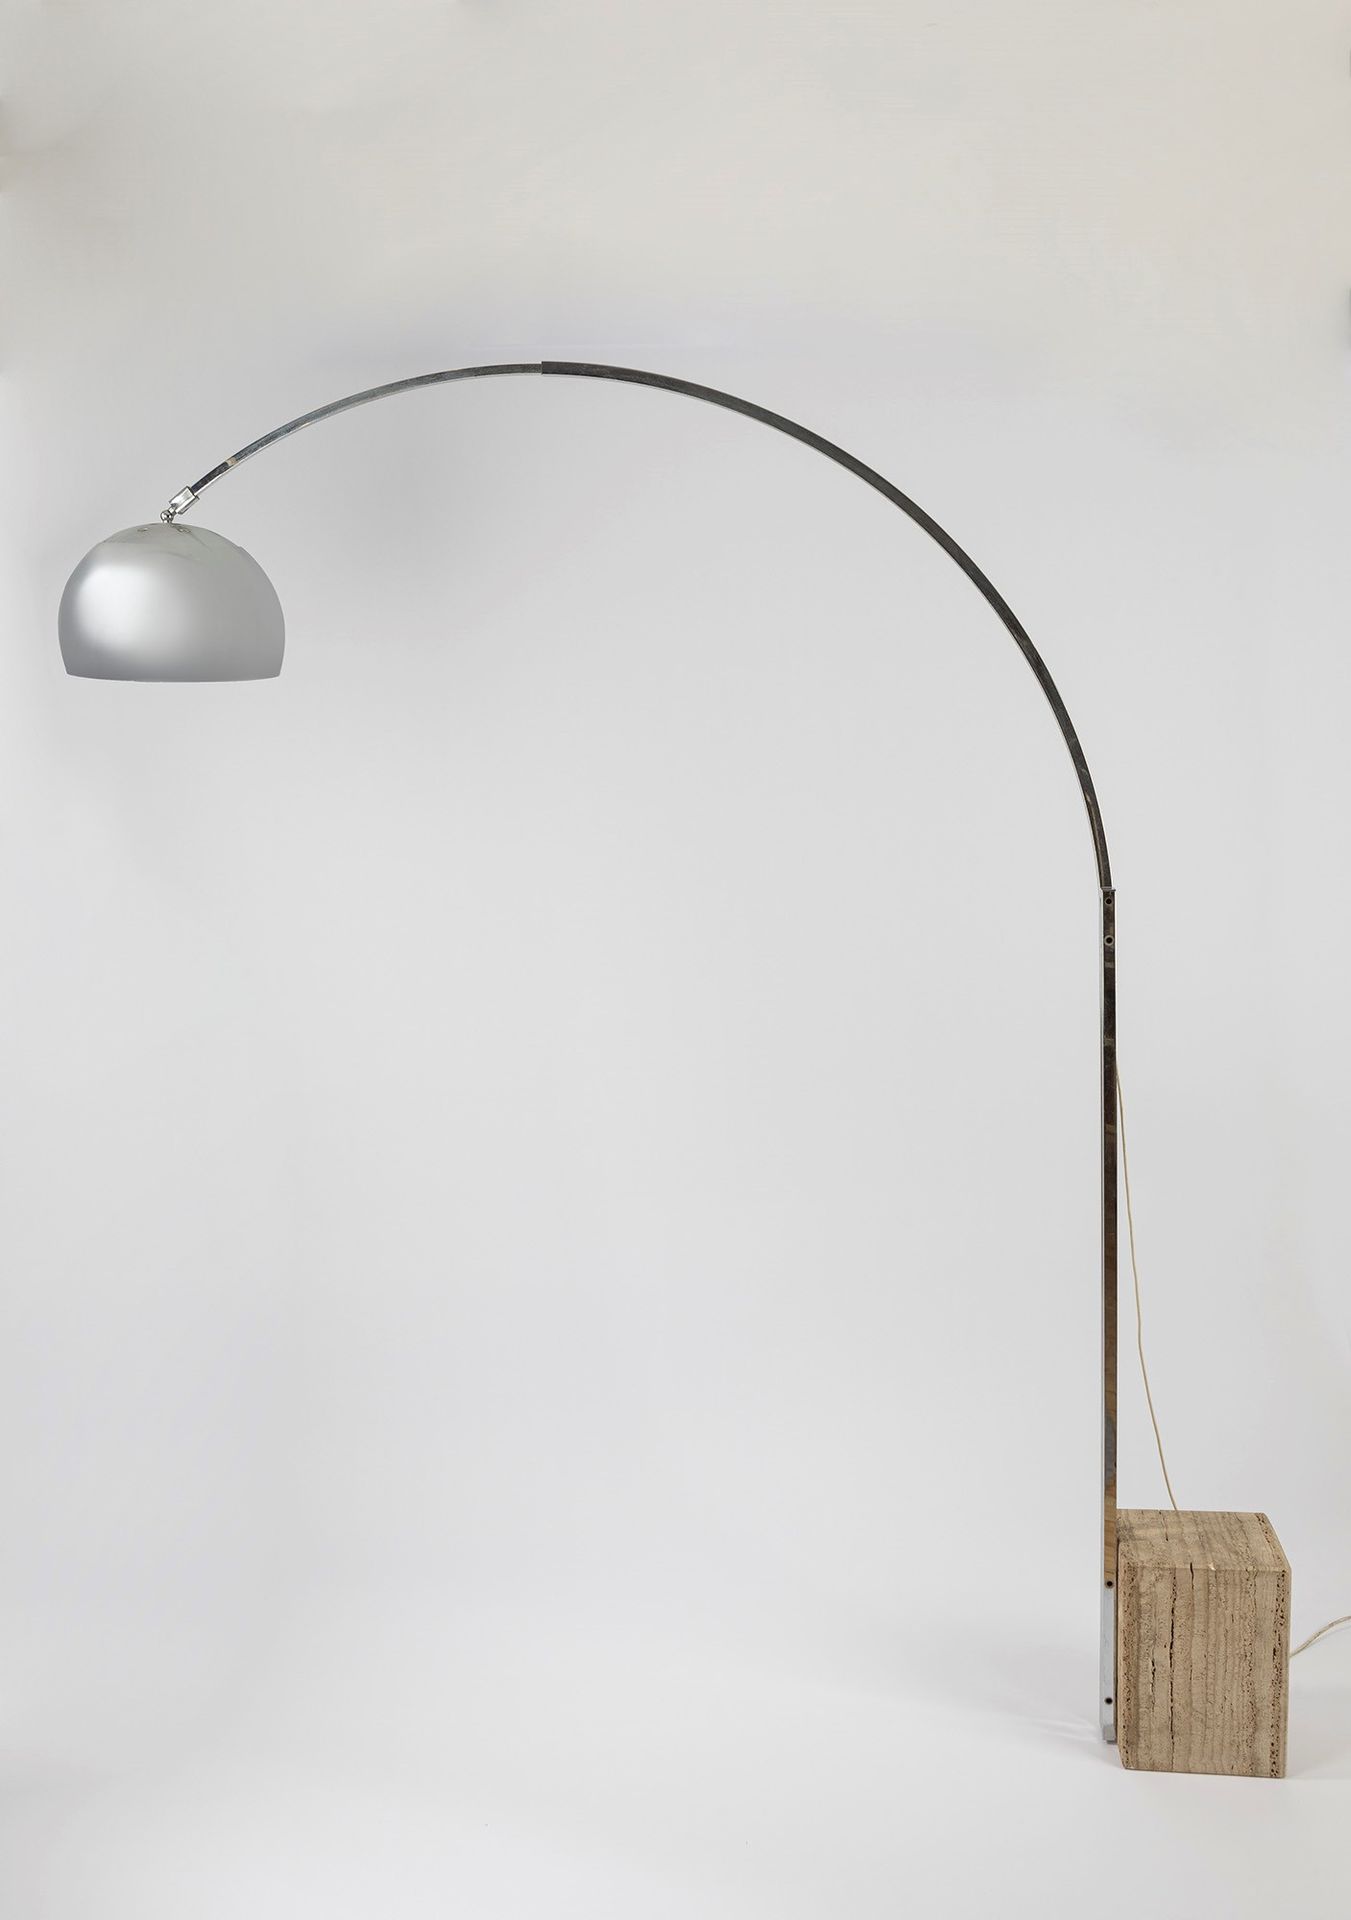 ITALIAN MANUFACTURE Floor lamp, 60's period

base cm 27 x 16 x 35 H, max footpri&hellip;